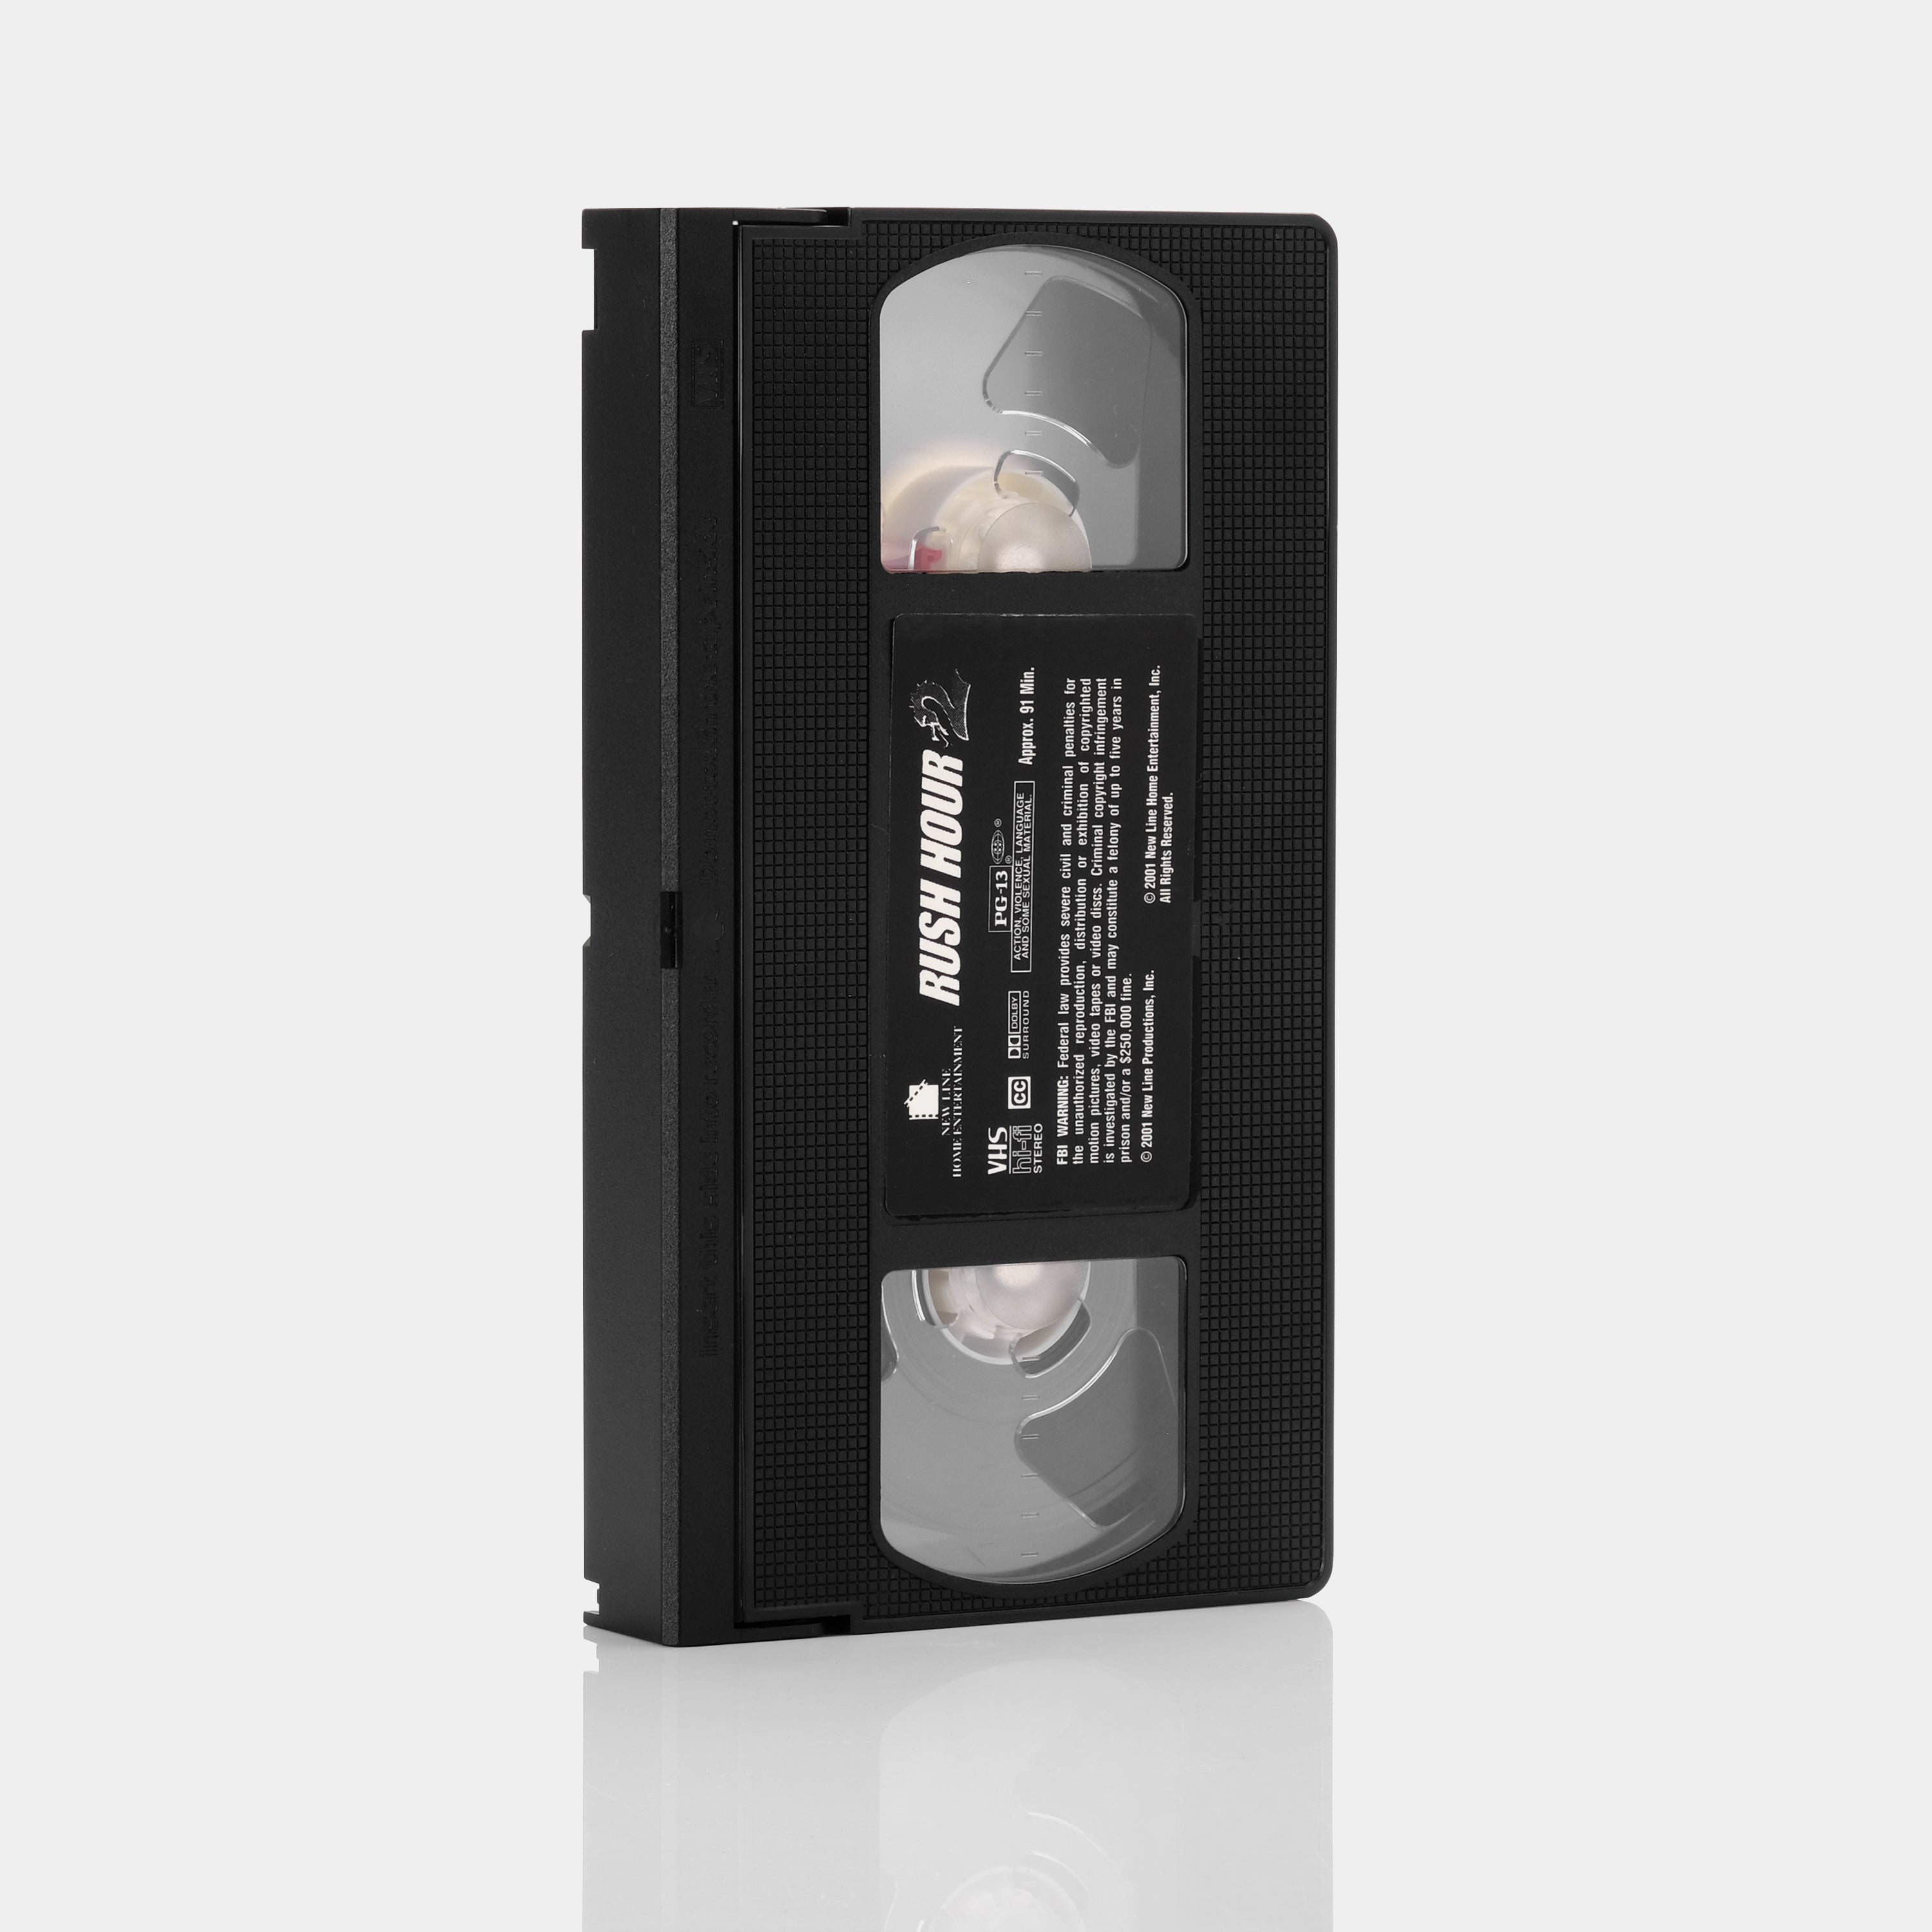 Rush Hour 2 VHS Tape